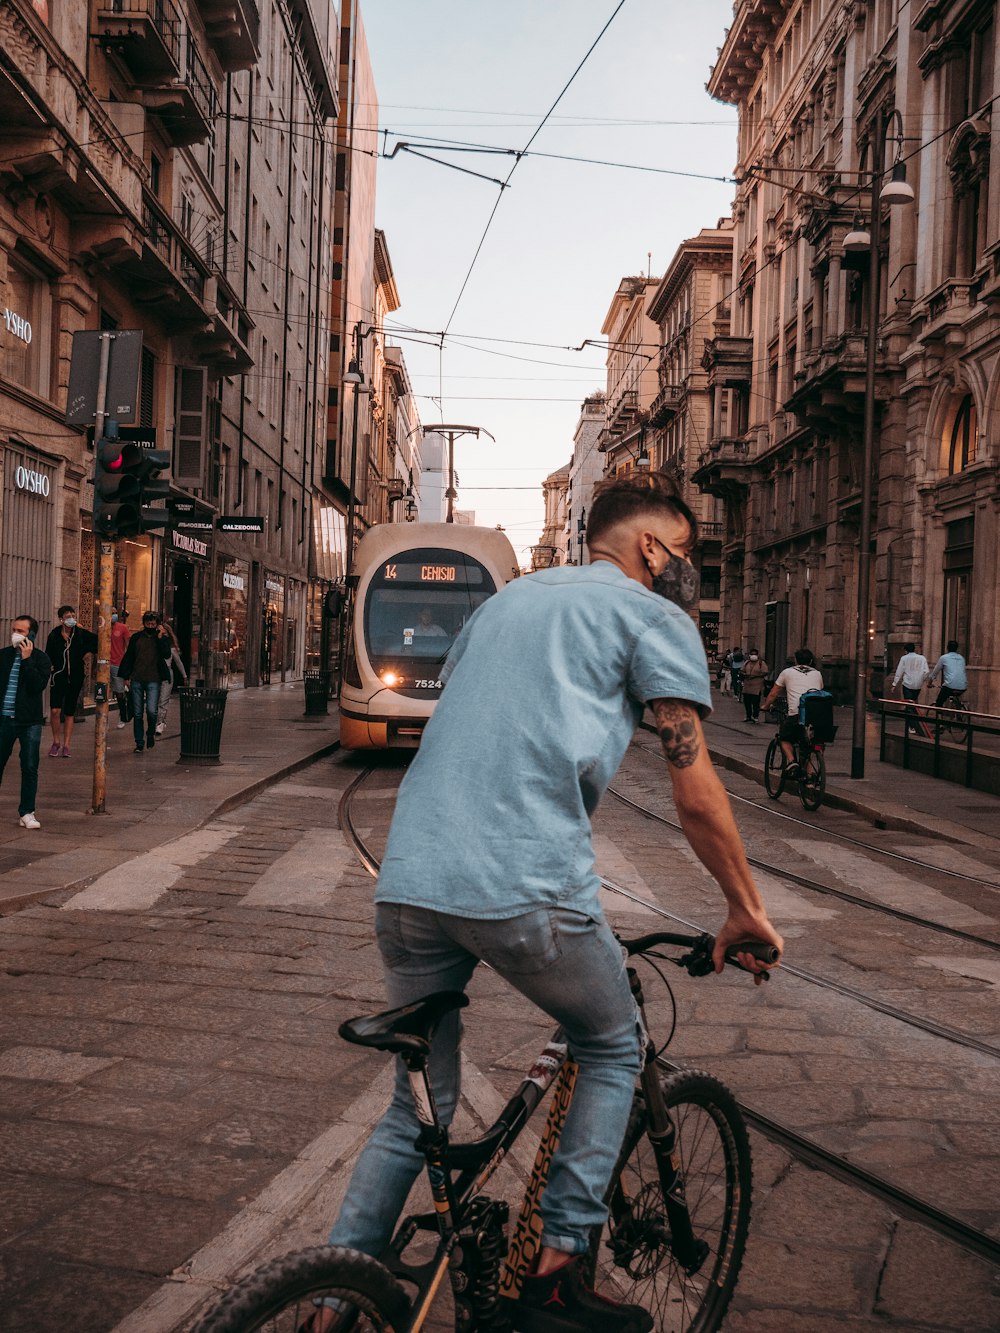 man in blue shirt riding bicycle on street during daytime